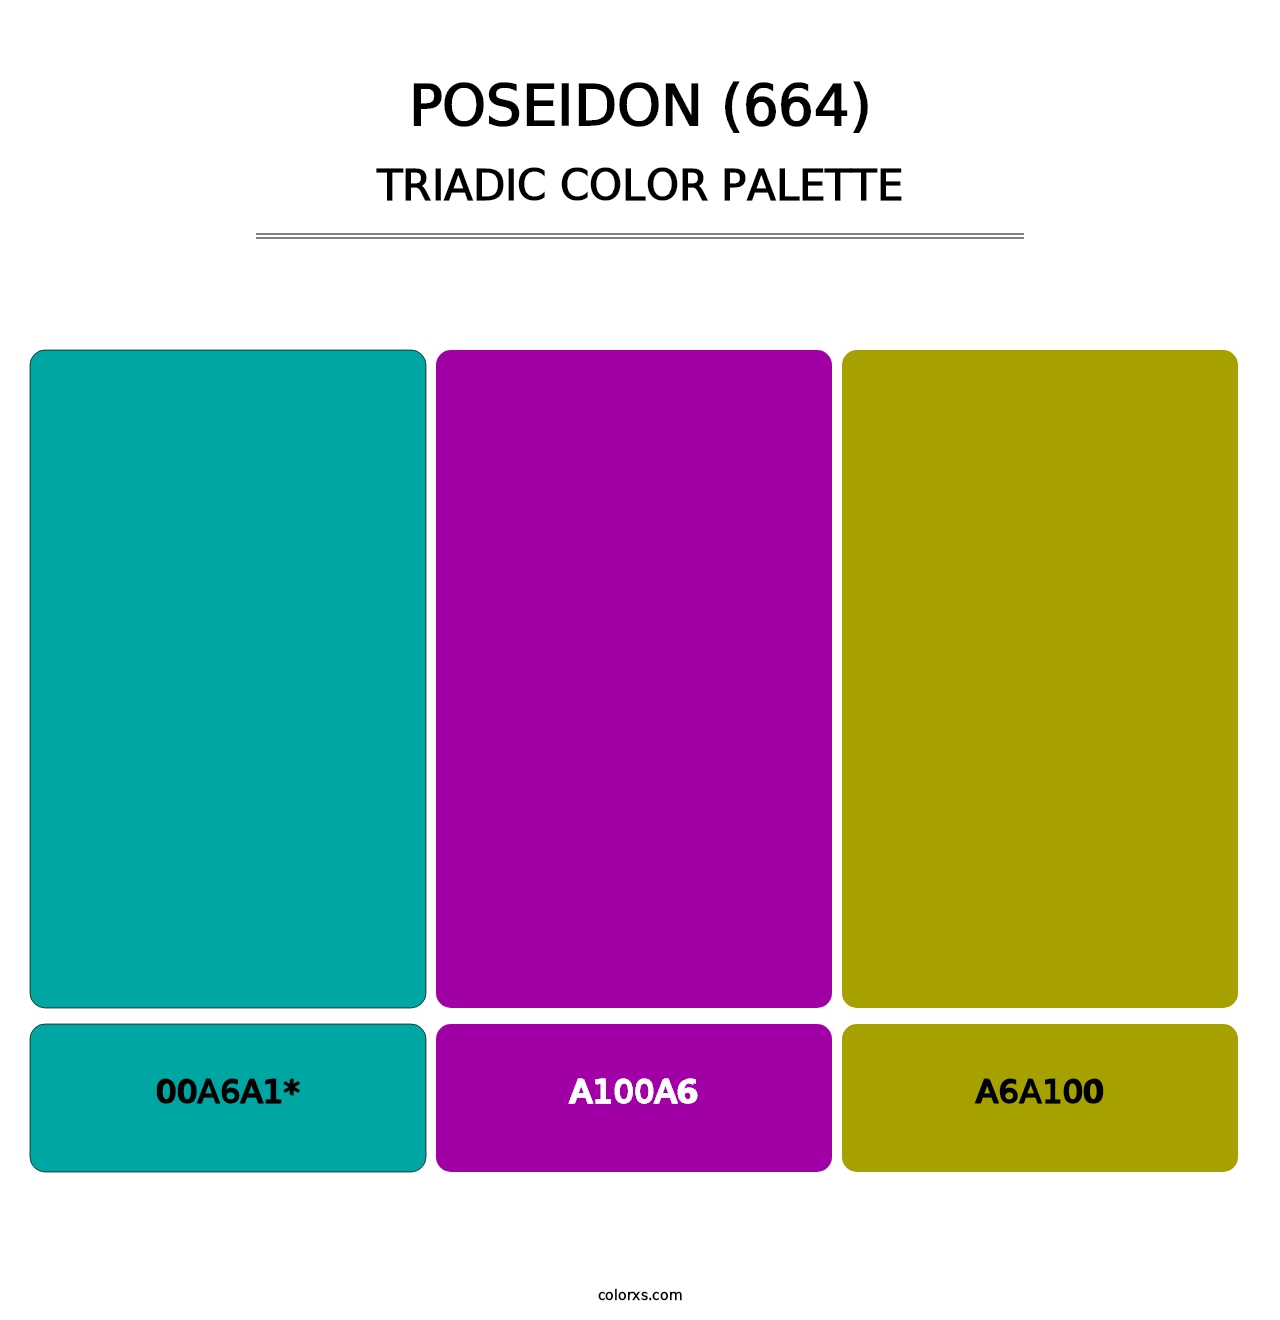 Poseidon (664) - Triadic Color Palette